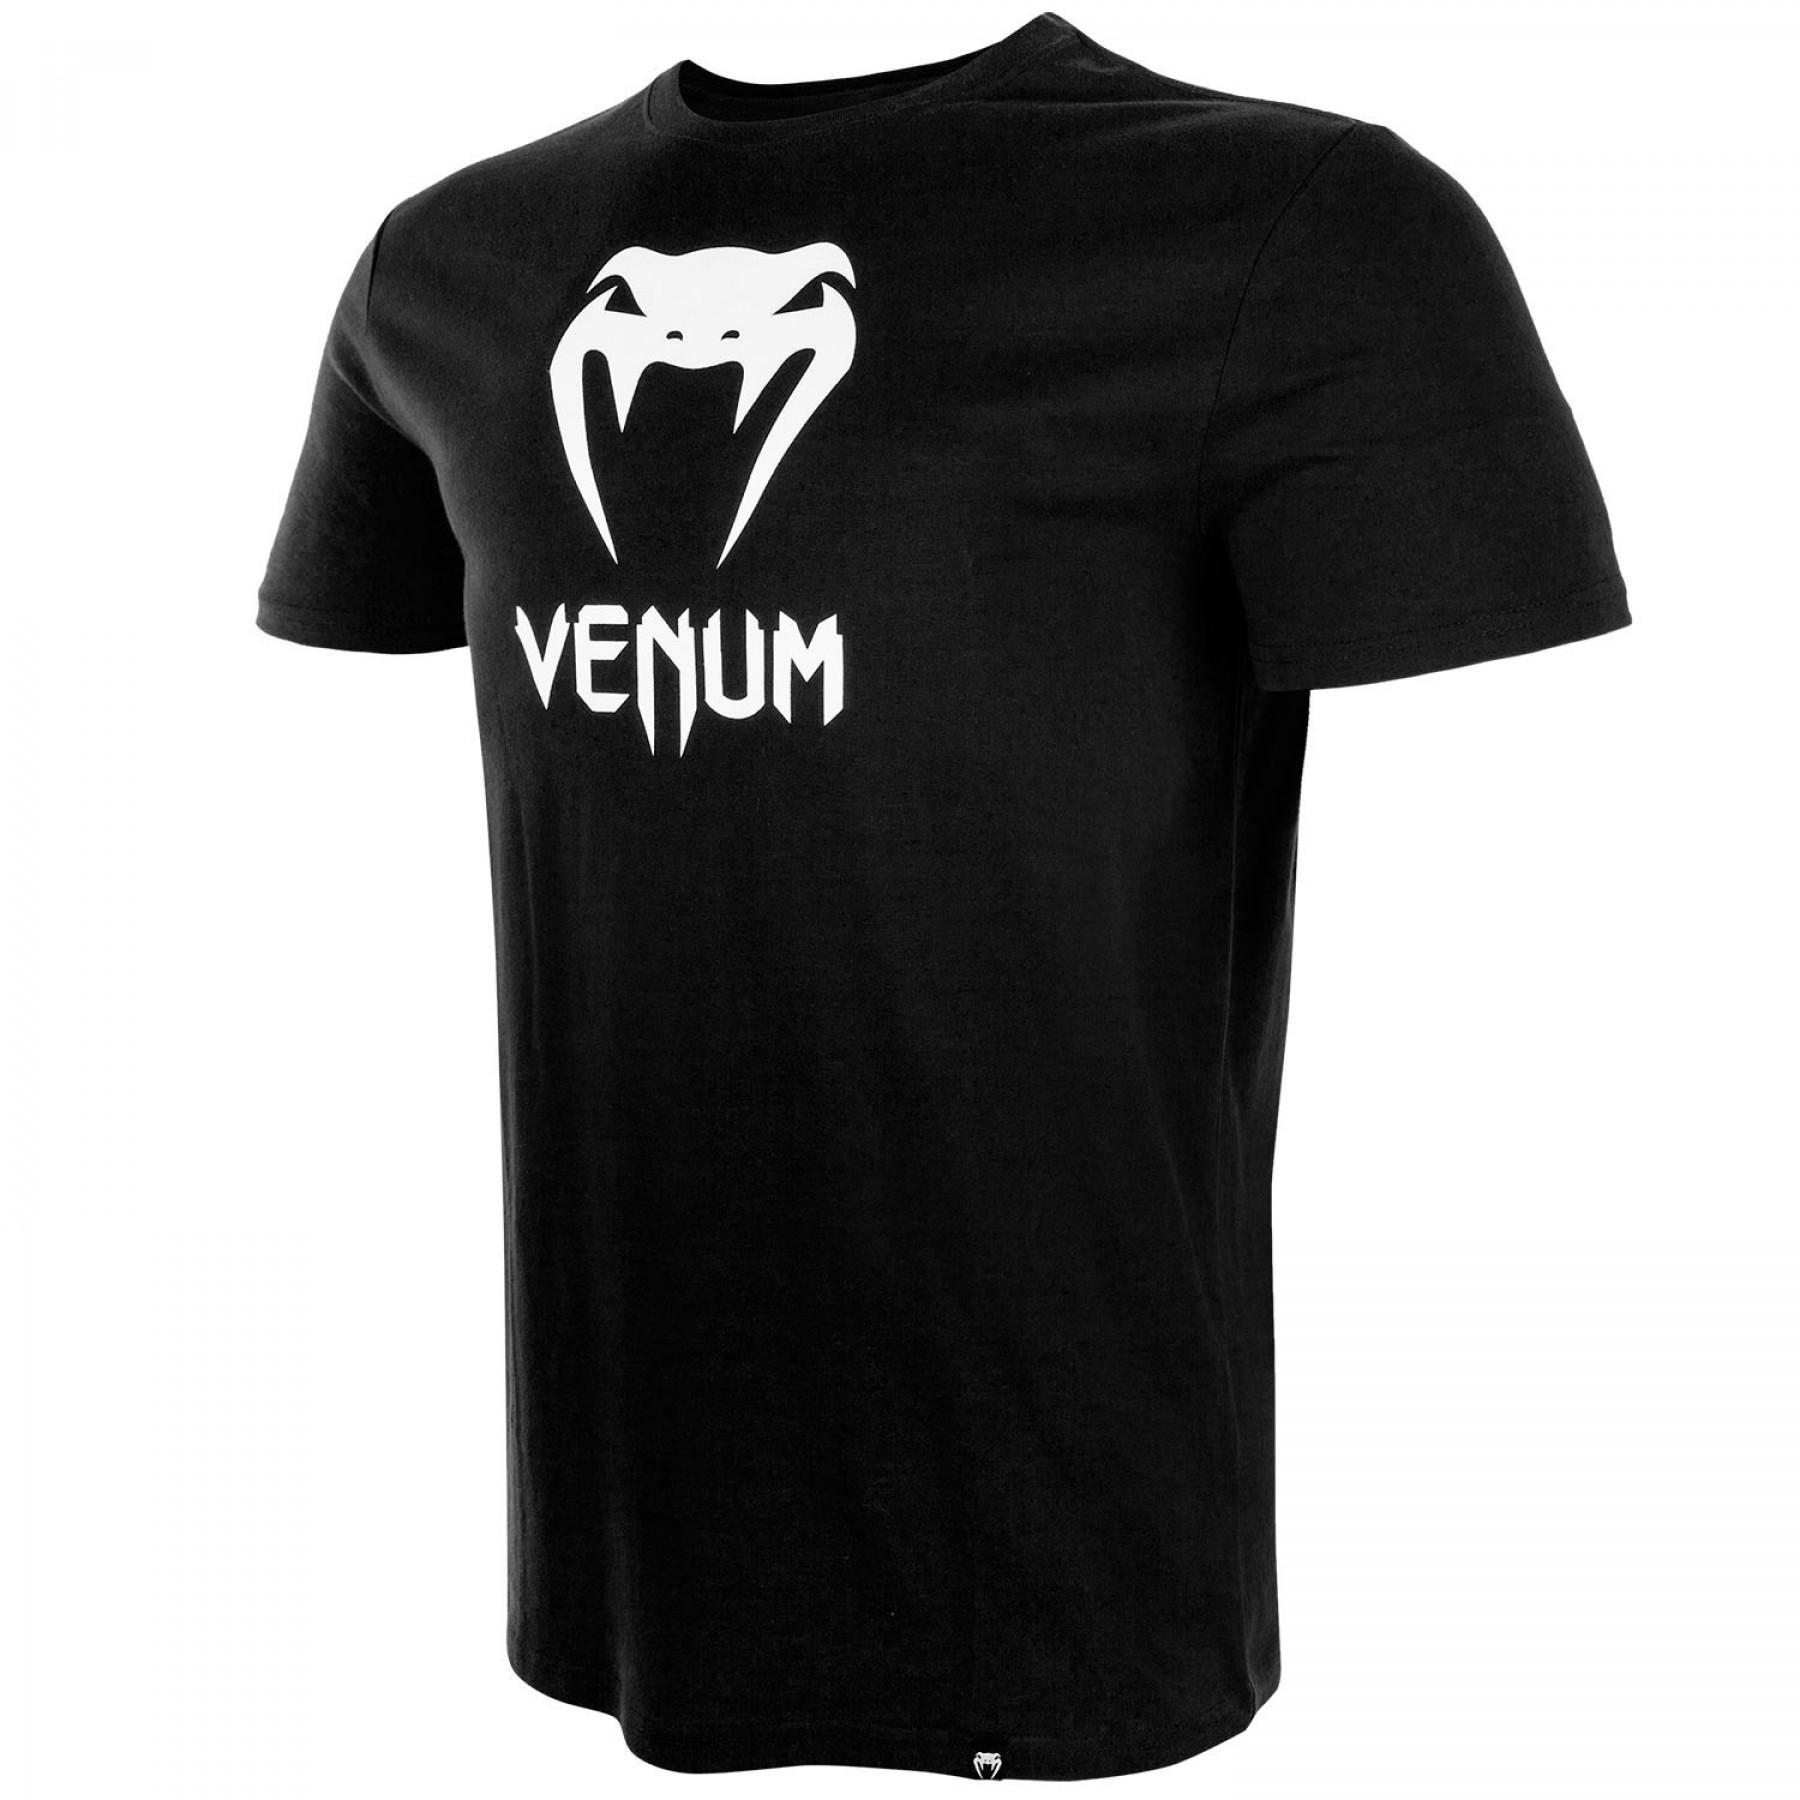 Kinder-T-shirt Venum Classic